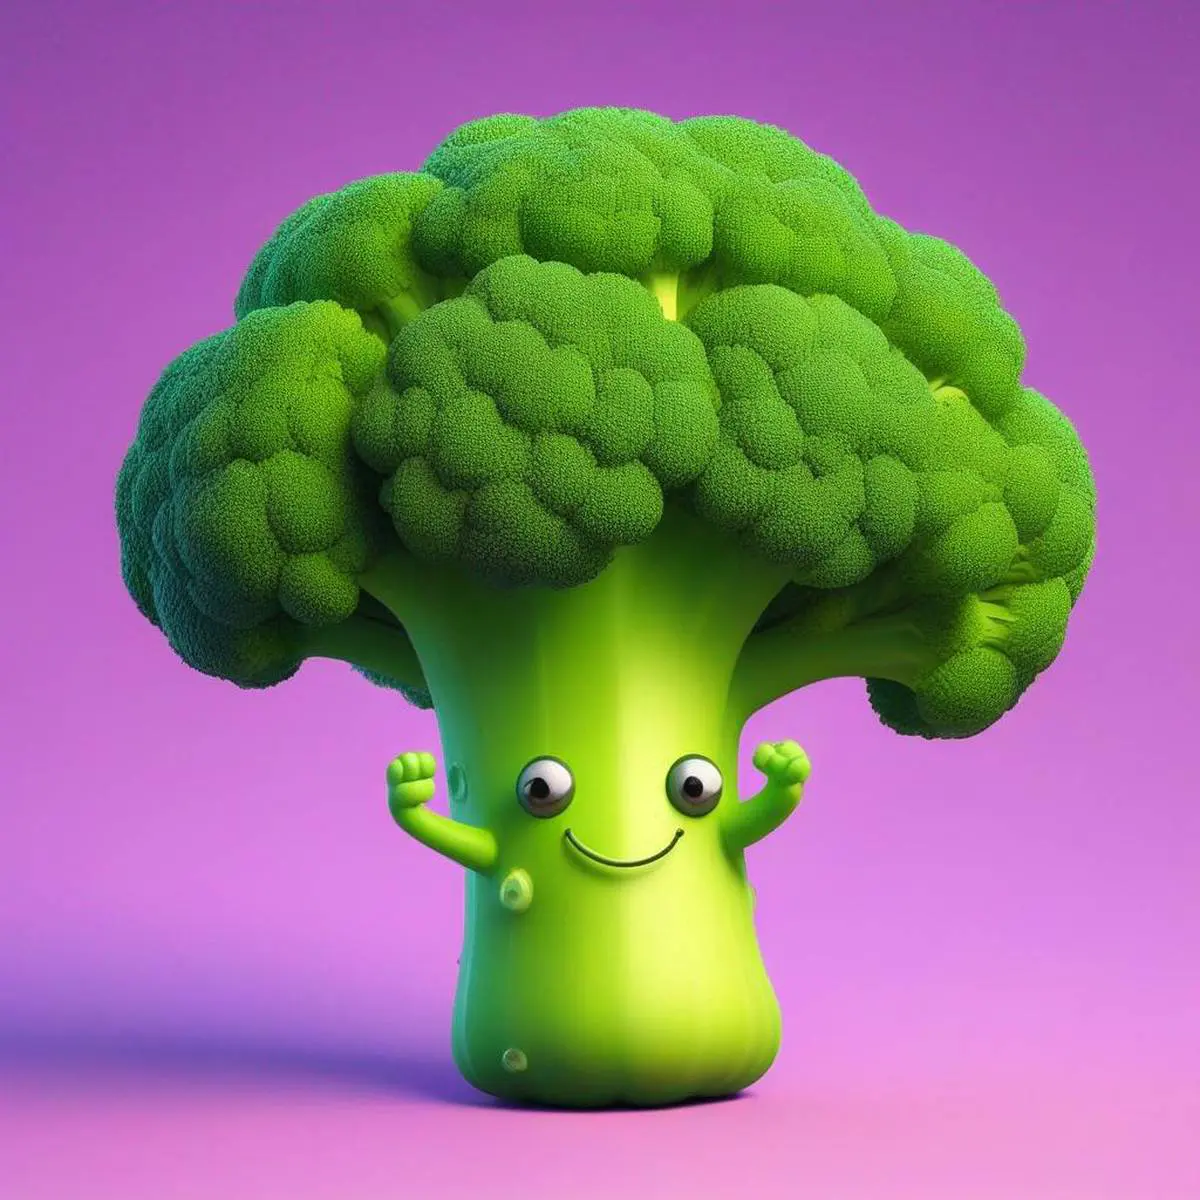 Broccoli puns